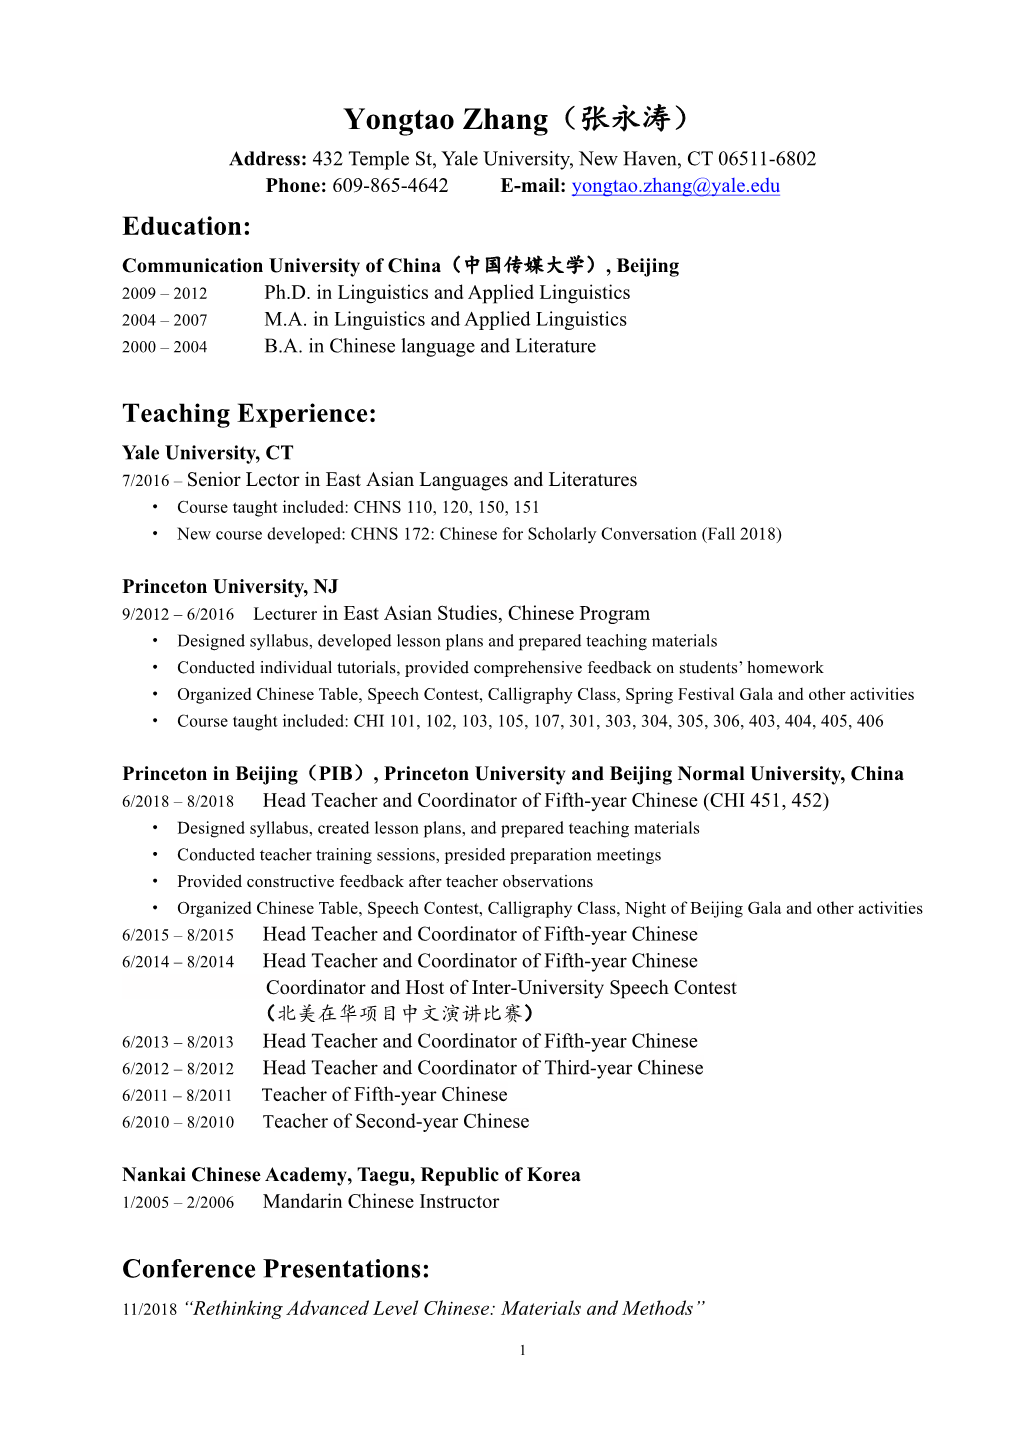 Yongtao Zhang's CV